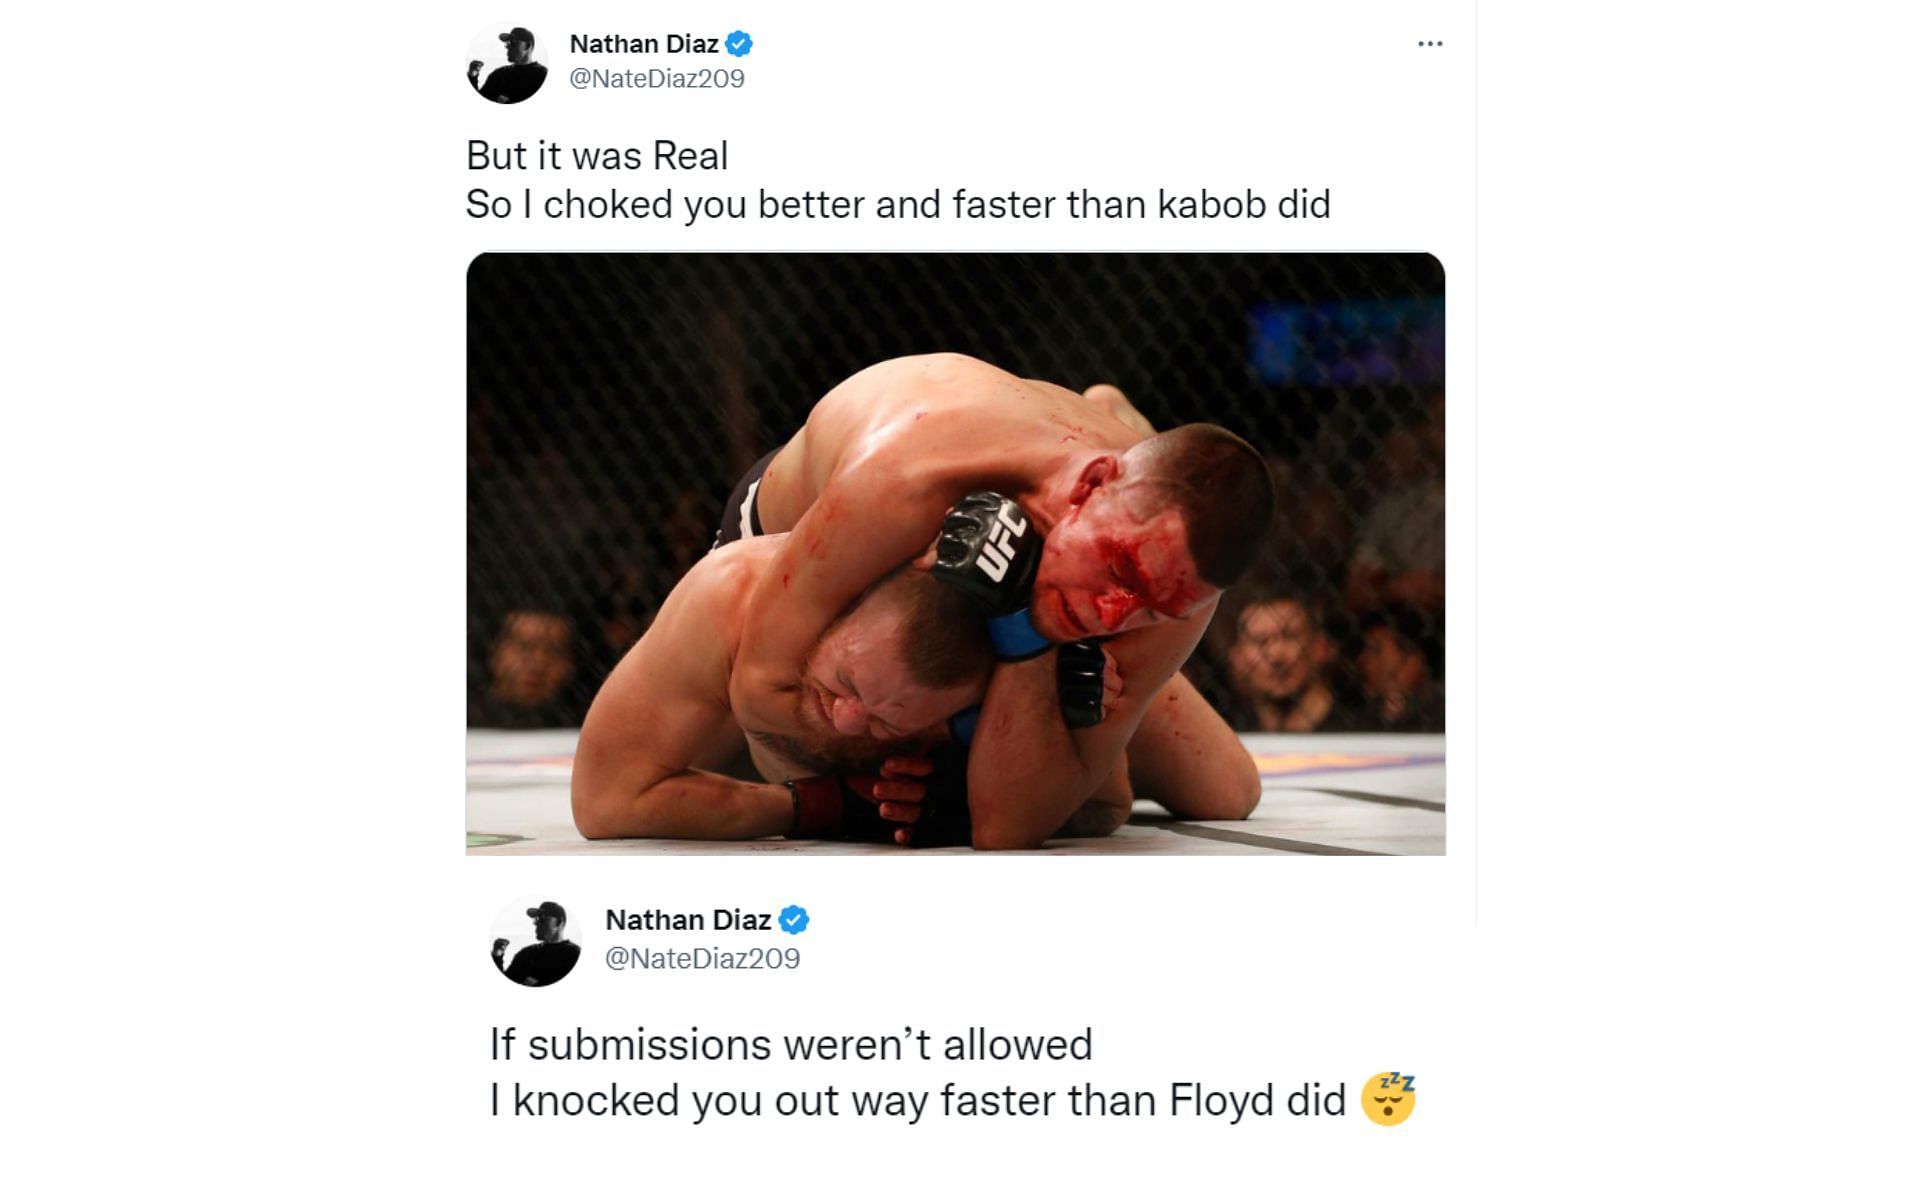 Nate Diaz responds to Conor McGregor [Credits: @NateDiaz209 on Twitter]